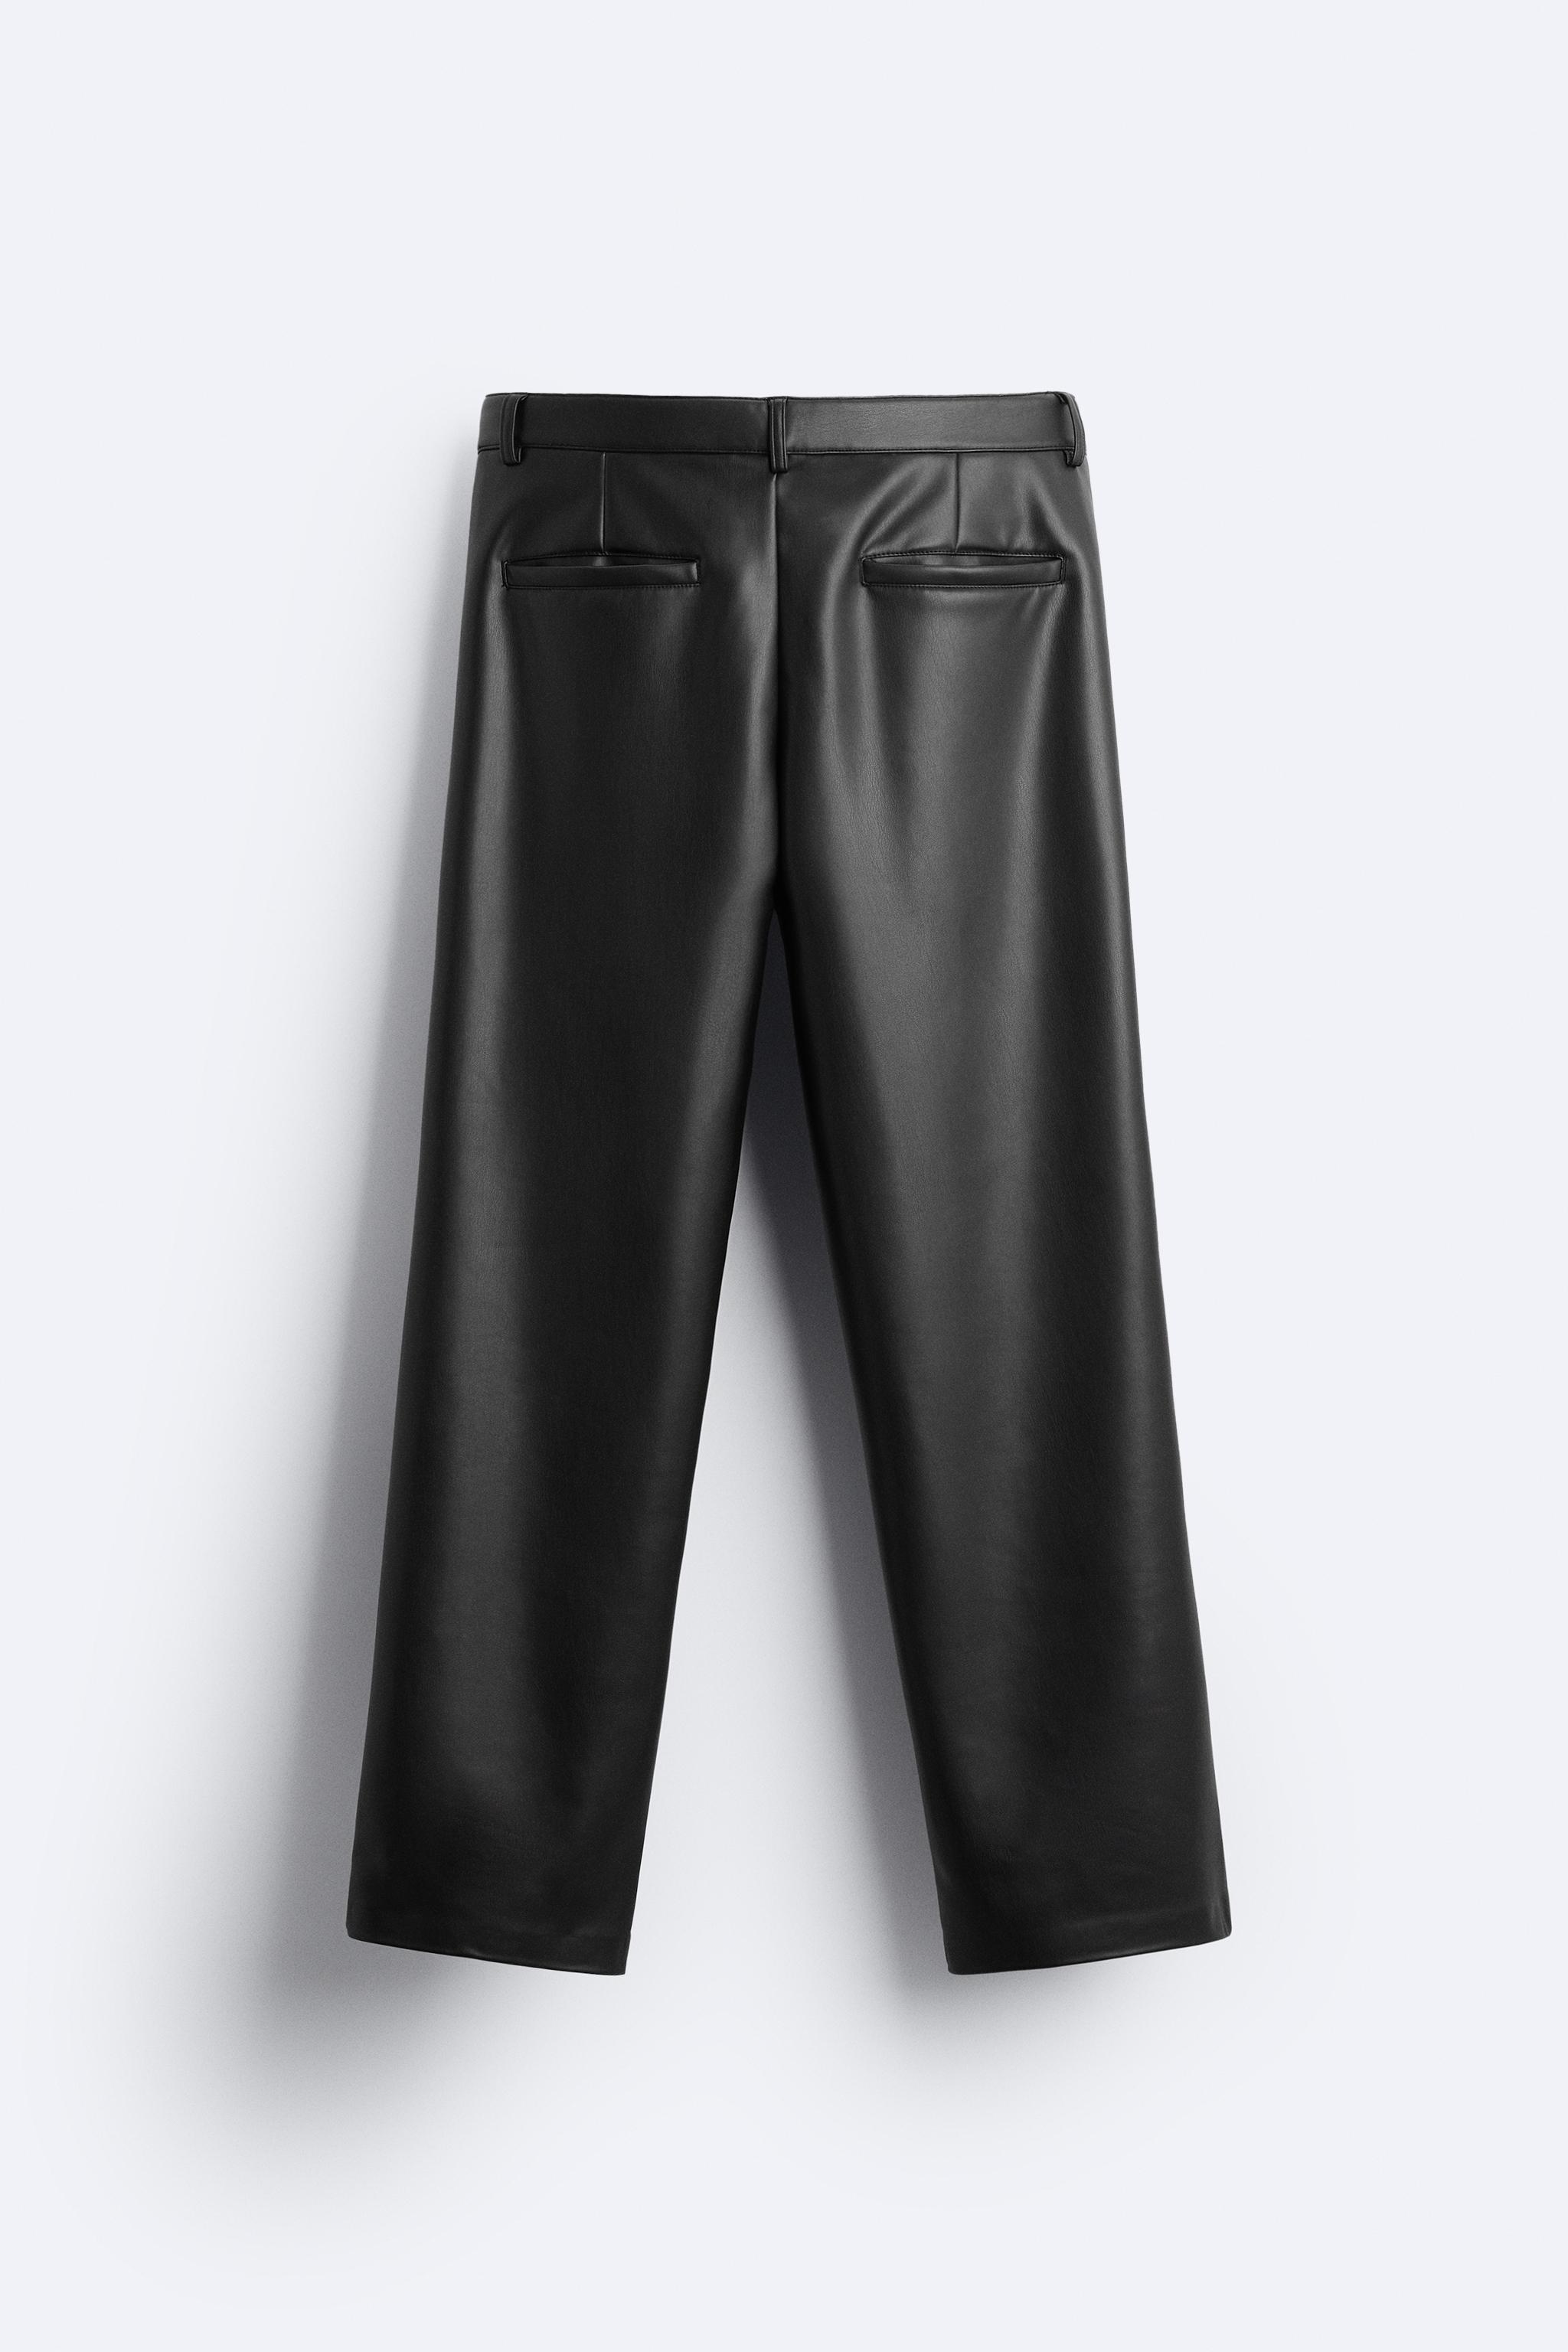 high Zara high waisted leather trousers